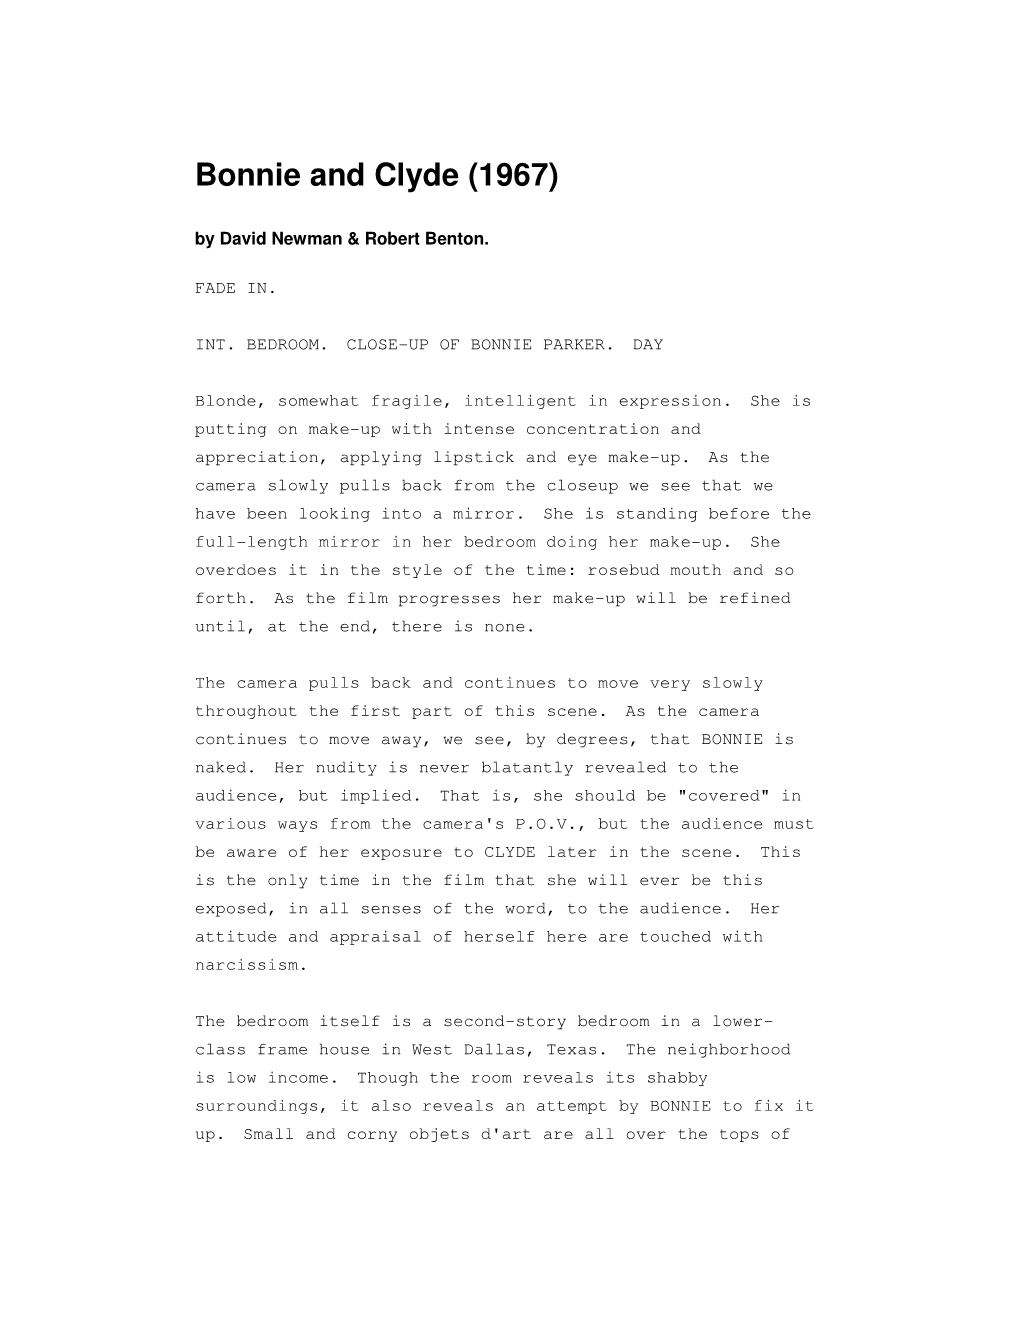 Bonnie and Clyde (1967) by David Newman & Robert Benton